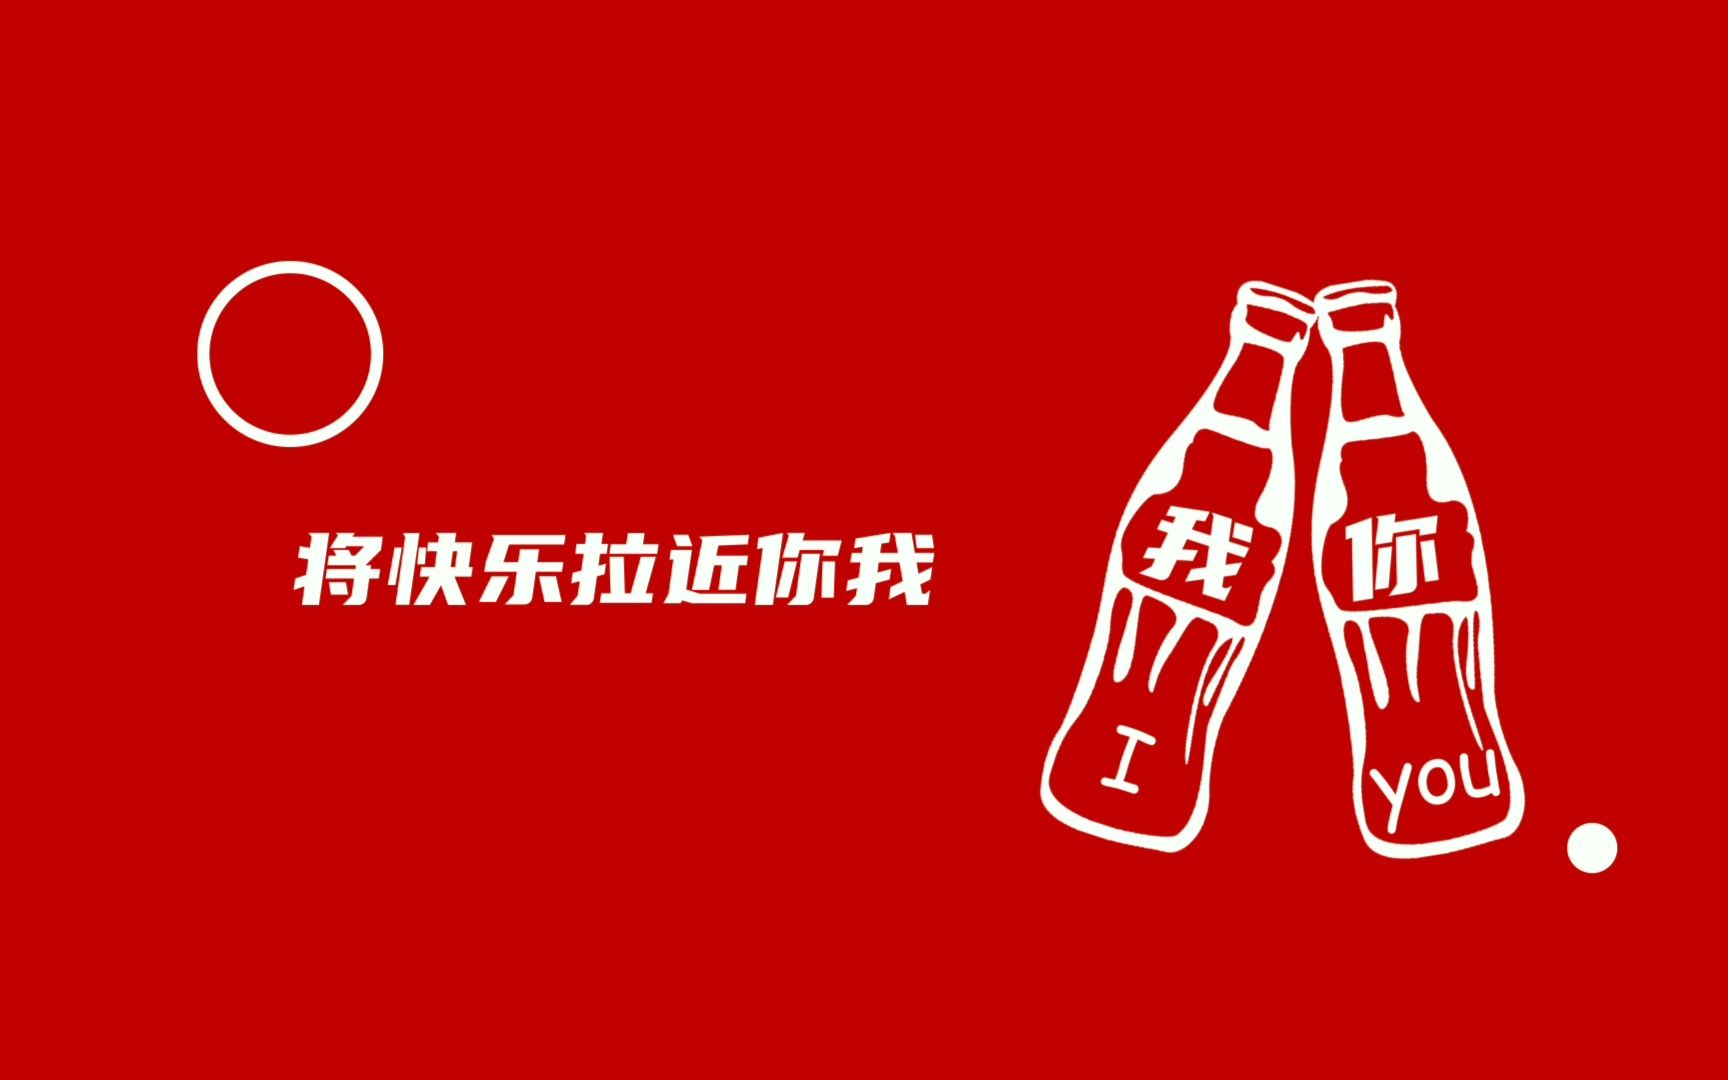 【AE作品】期末作业可口可乐广告